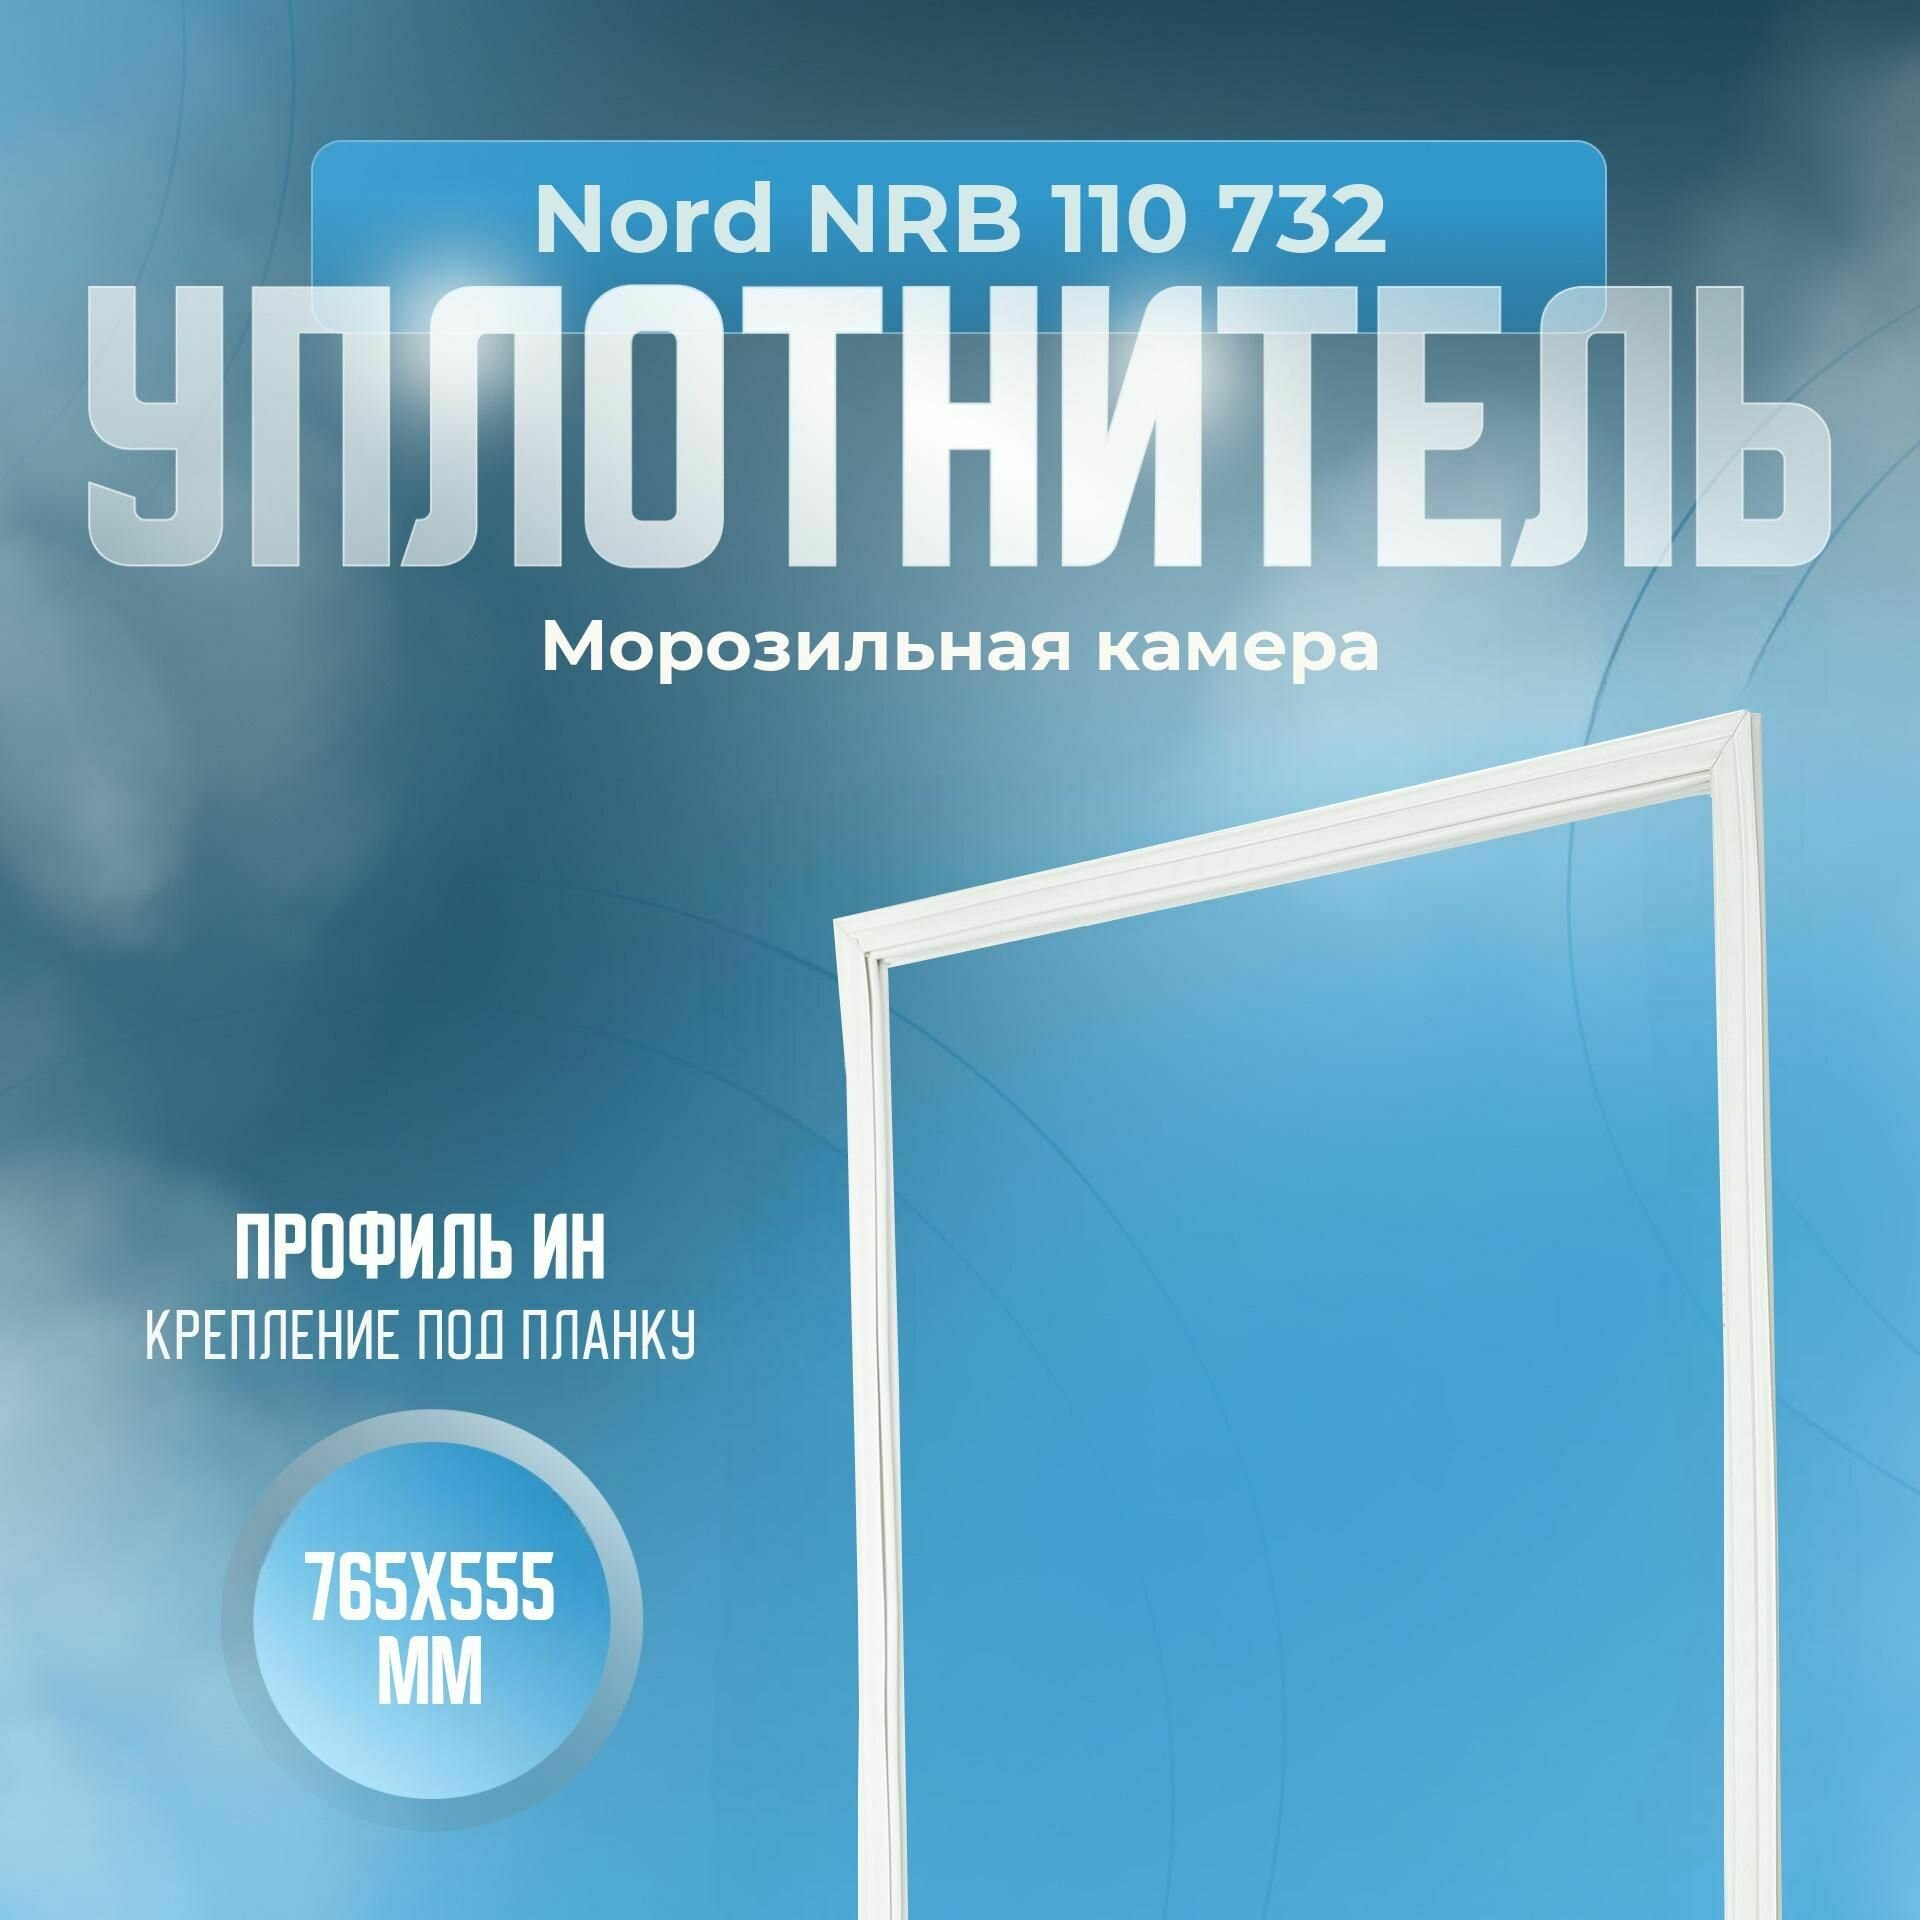 Уплотнитель Nord NRB 110 732. м. к, Размер - 765х555 мм. ИН